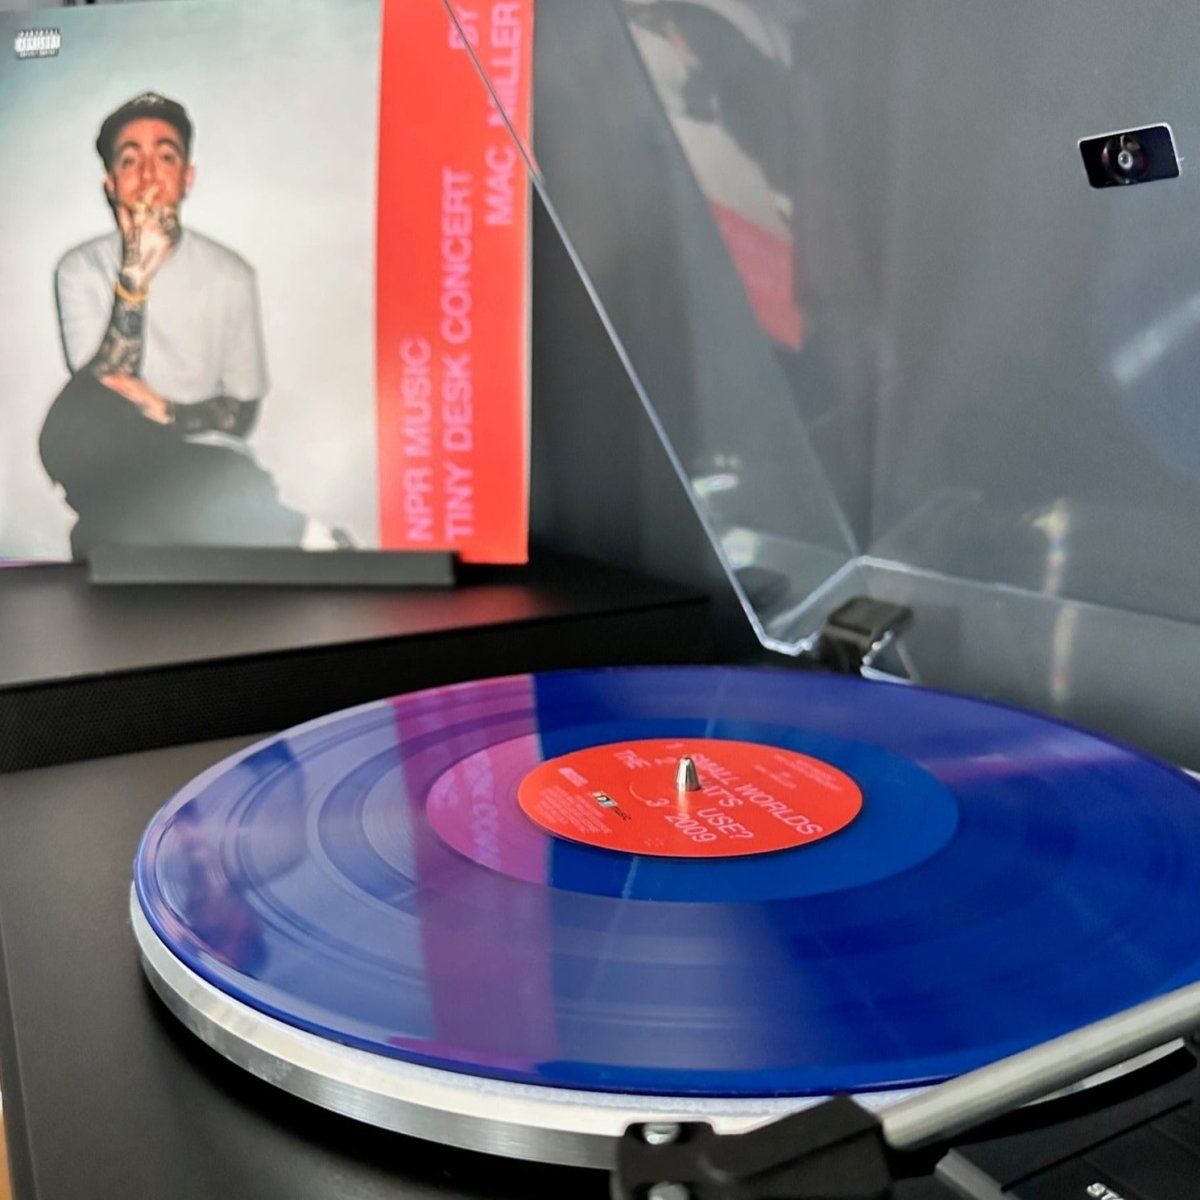 Mac Miller - NPR Music Tiny Desk Concert - Blue Vinyl - BeatRelease